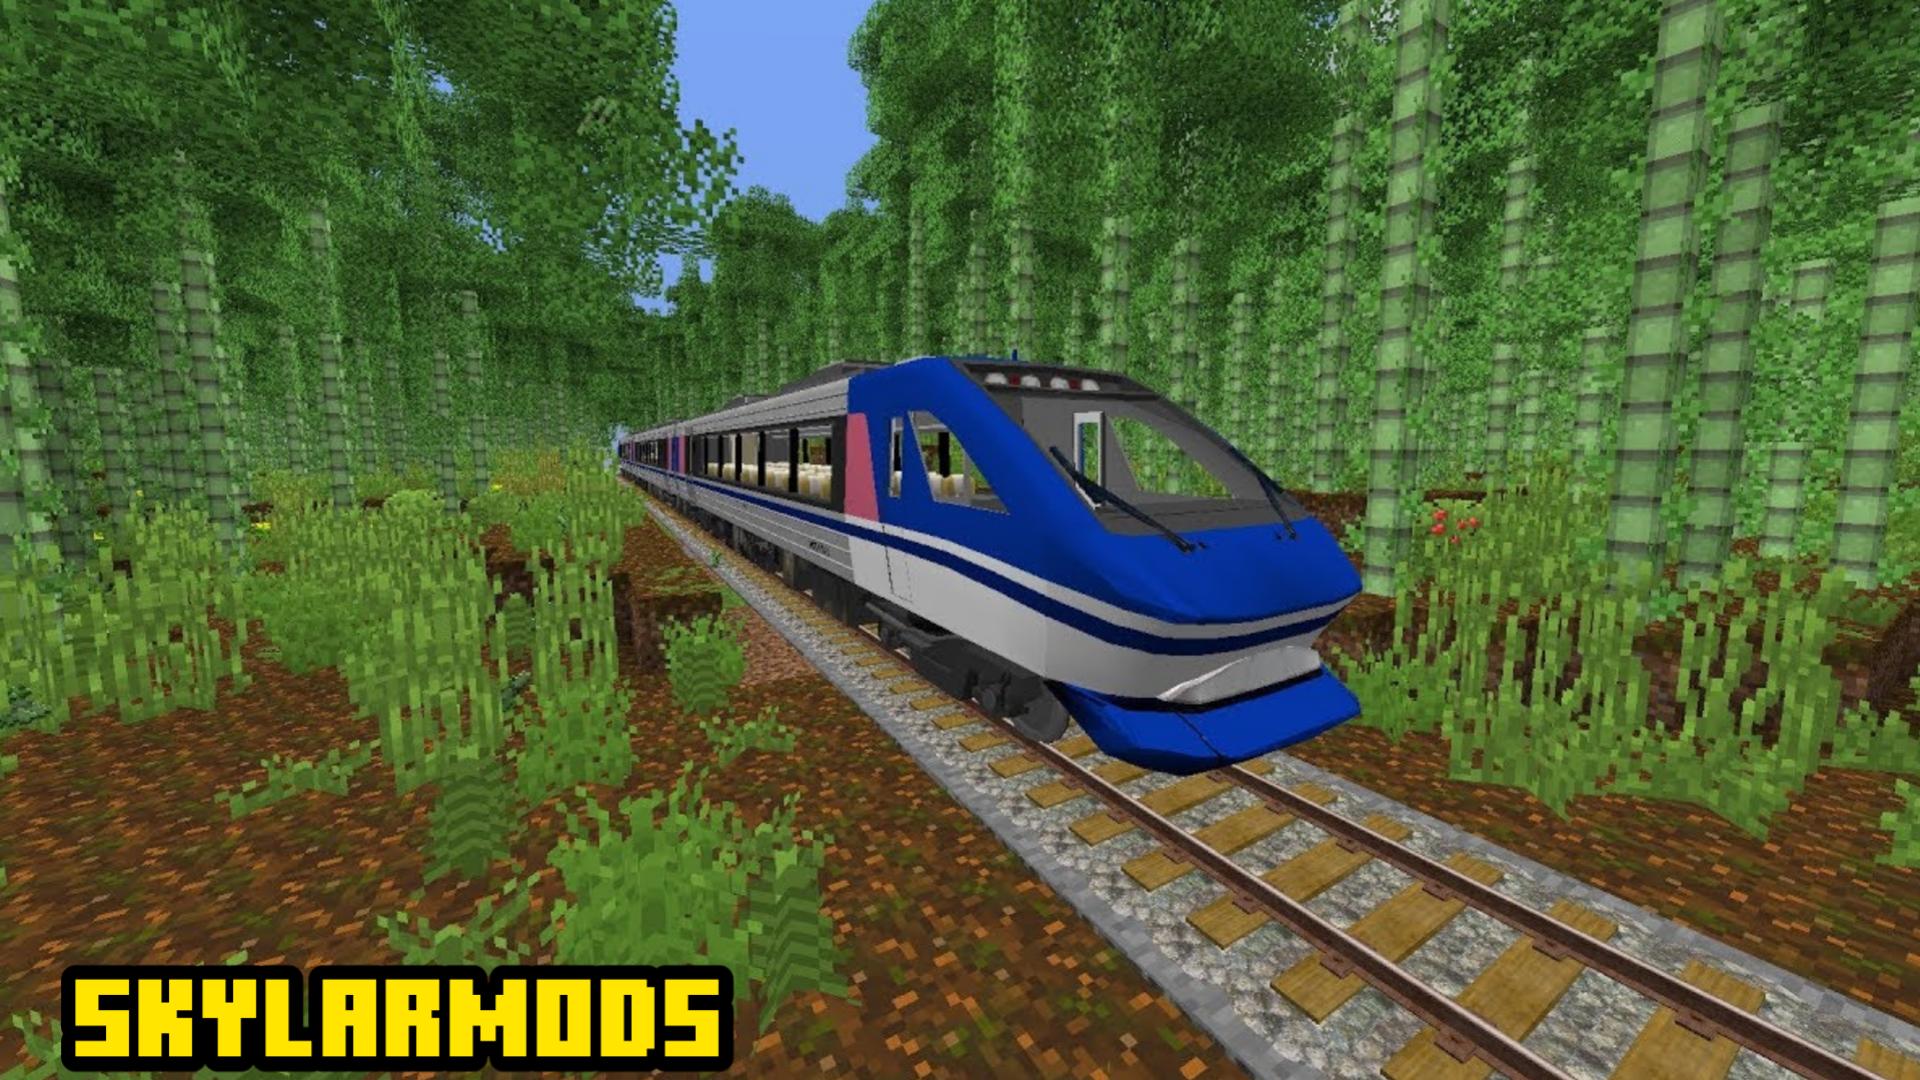 Steam n rails 1.20 1. RTM (real Train Mod) Эр 2. Real Train Mod 1.7.10 РЖД. Эр2 для RTM 1.12.2. Pack real Train RTM 1.12.2.